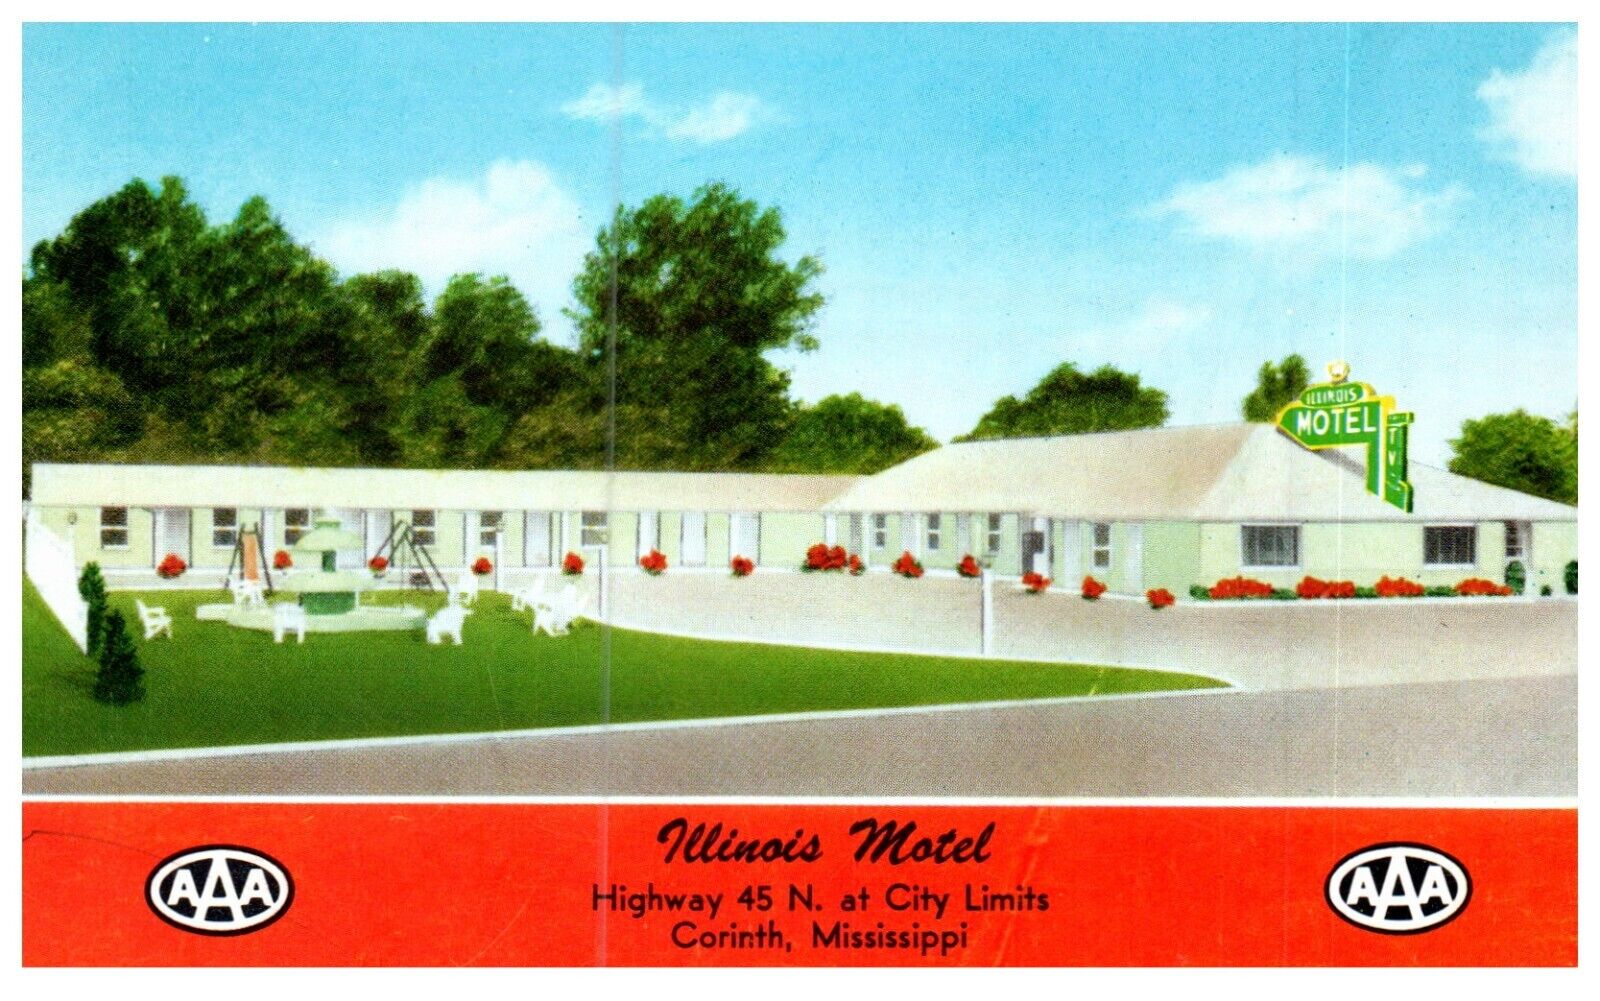 Illinois Motel Corinth, MS Mississippi Hotel Motel Advertising Vintage Postcard